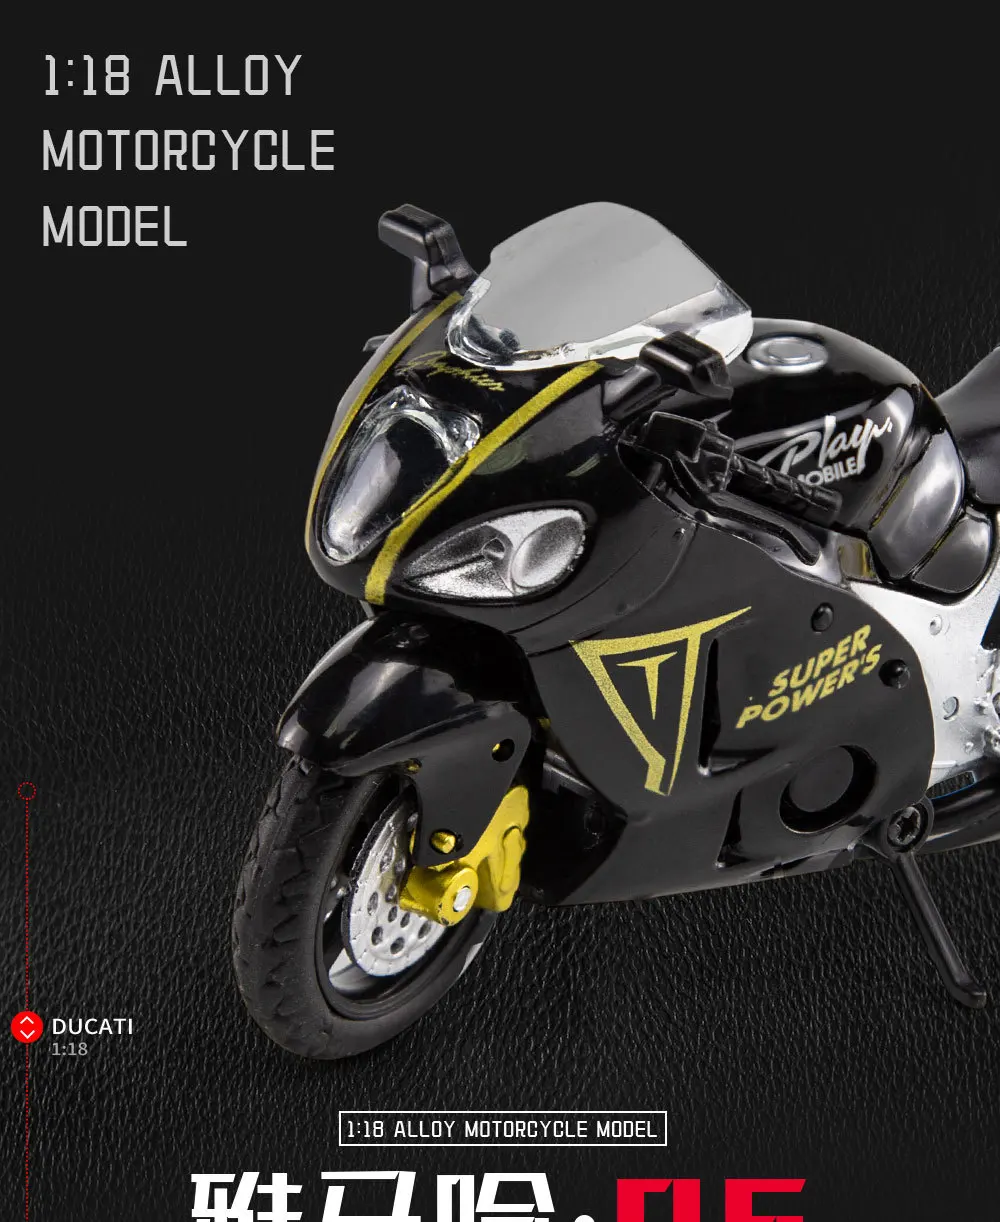  Lazat Chef Motocicleta de juguete para Yamaha R6 Mini aleación  de fundición a presión, modelo de motocicleta (color: 3) : Juguetes y Juegos